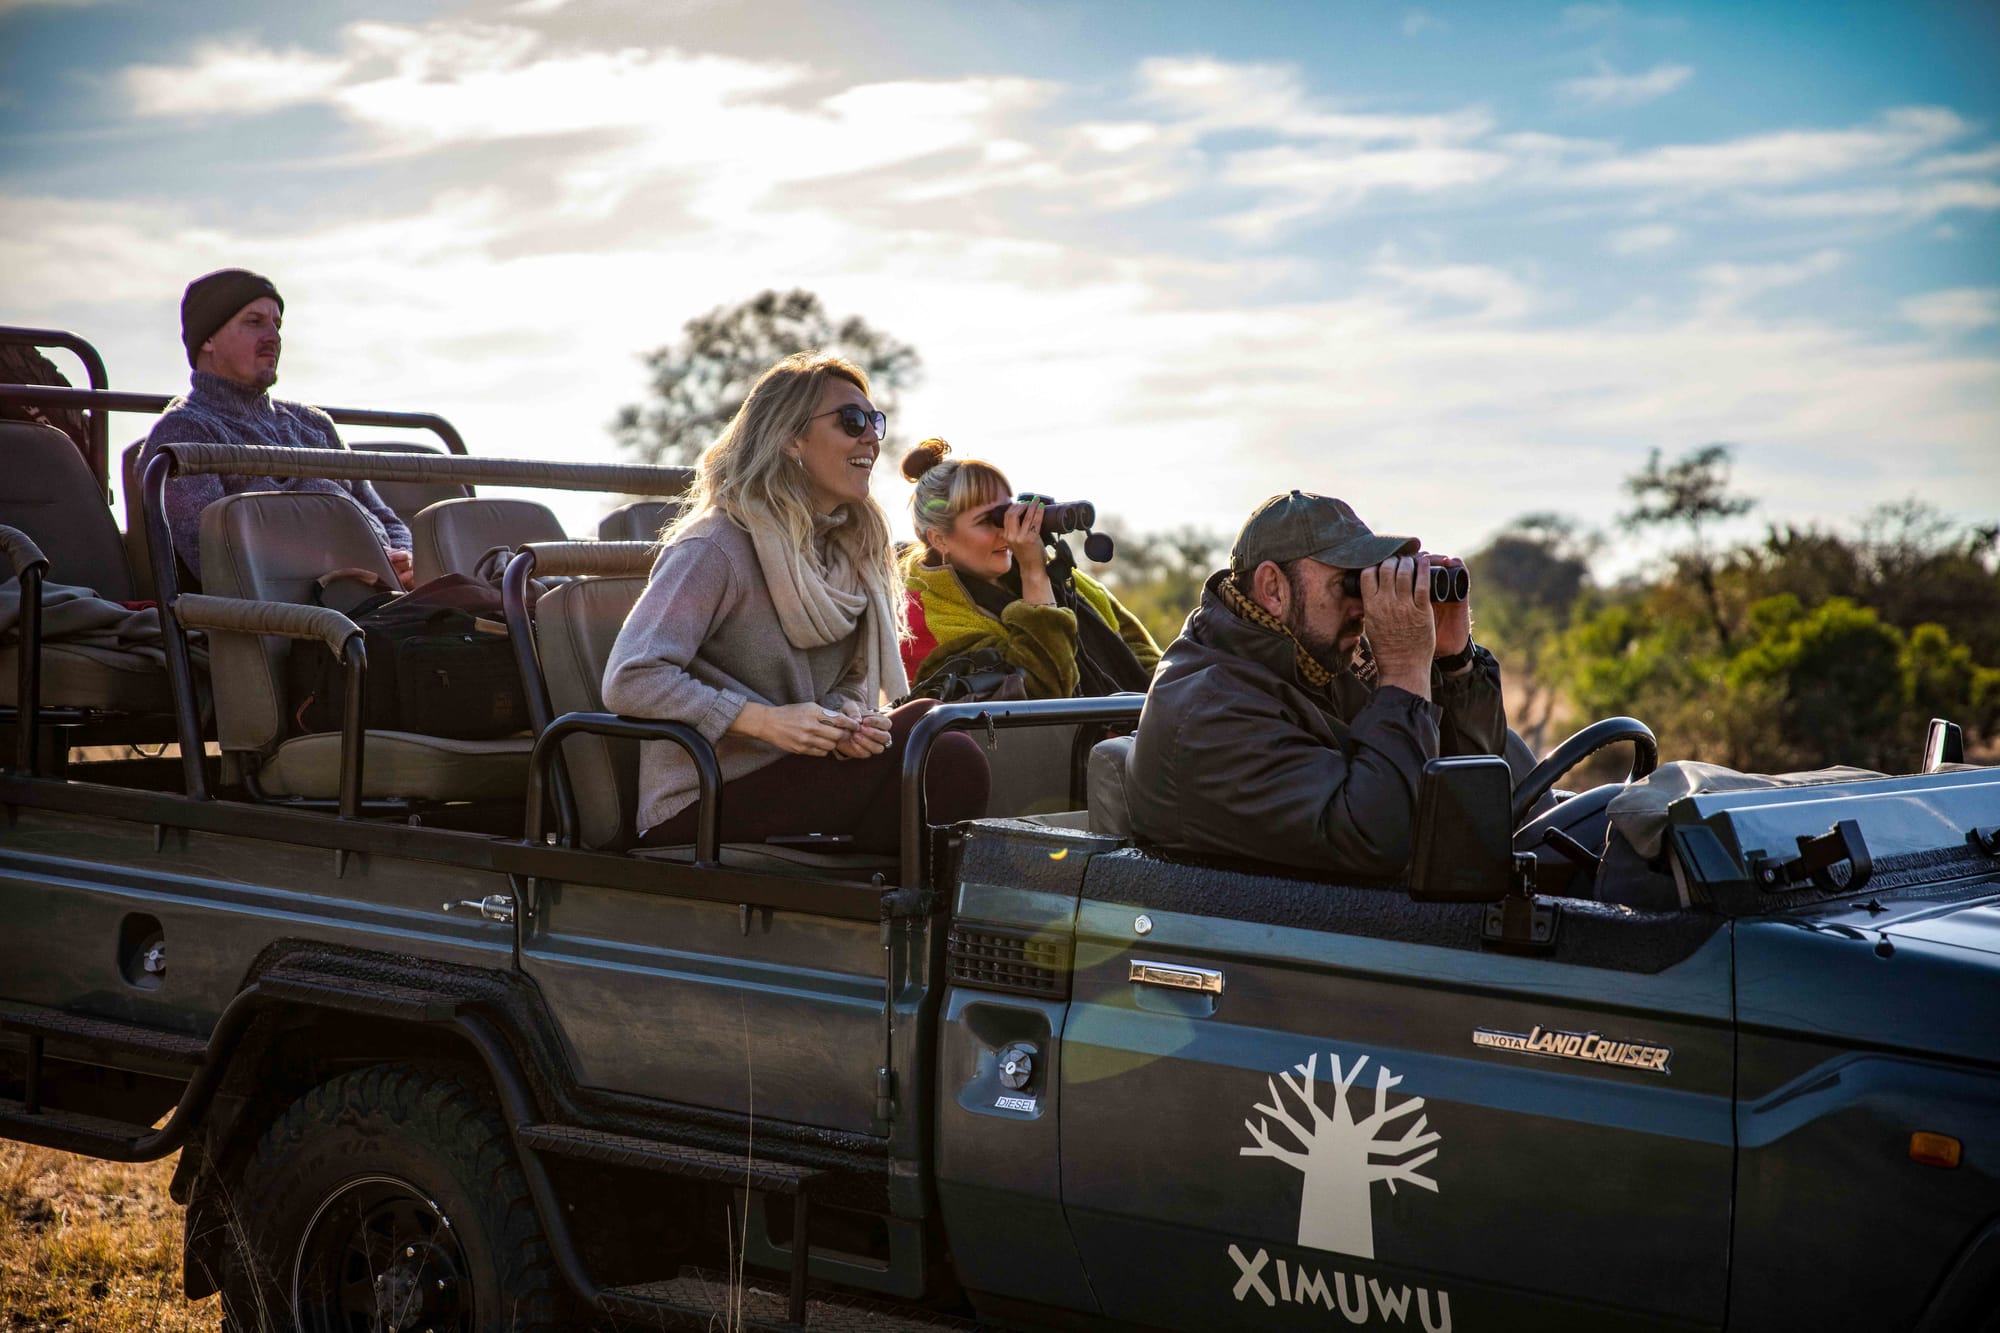 Sophie Morgan on the adaptable safari jeep in South Africa with Ximuwu Safari Lodge